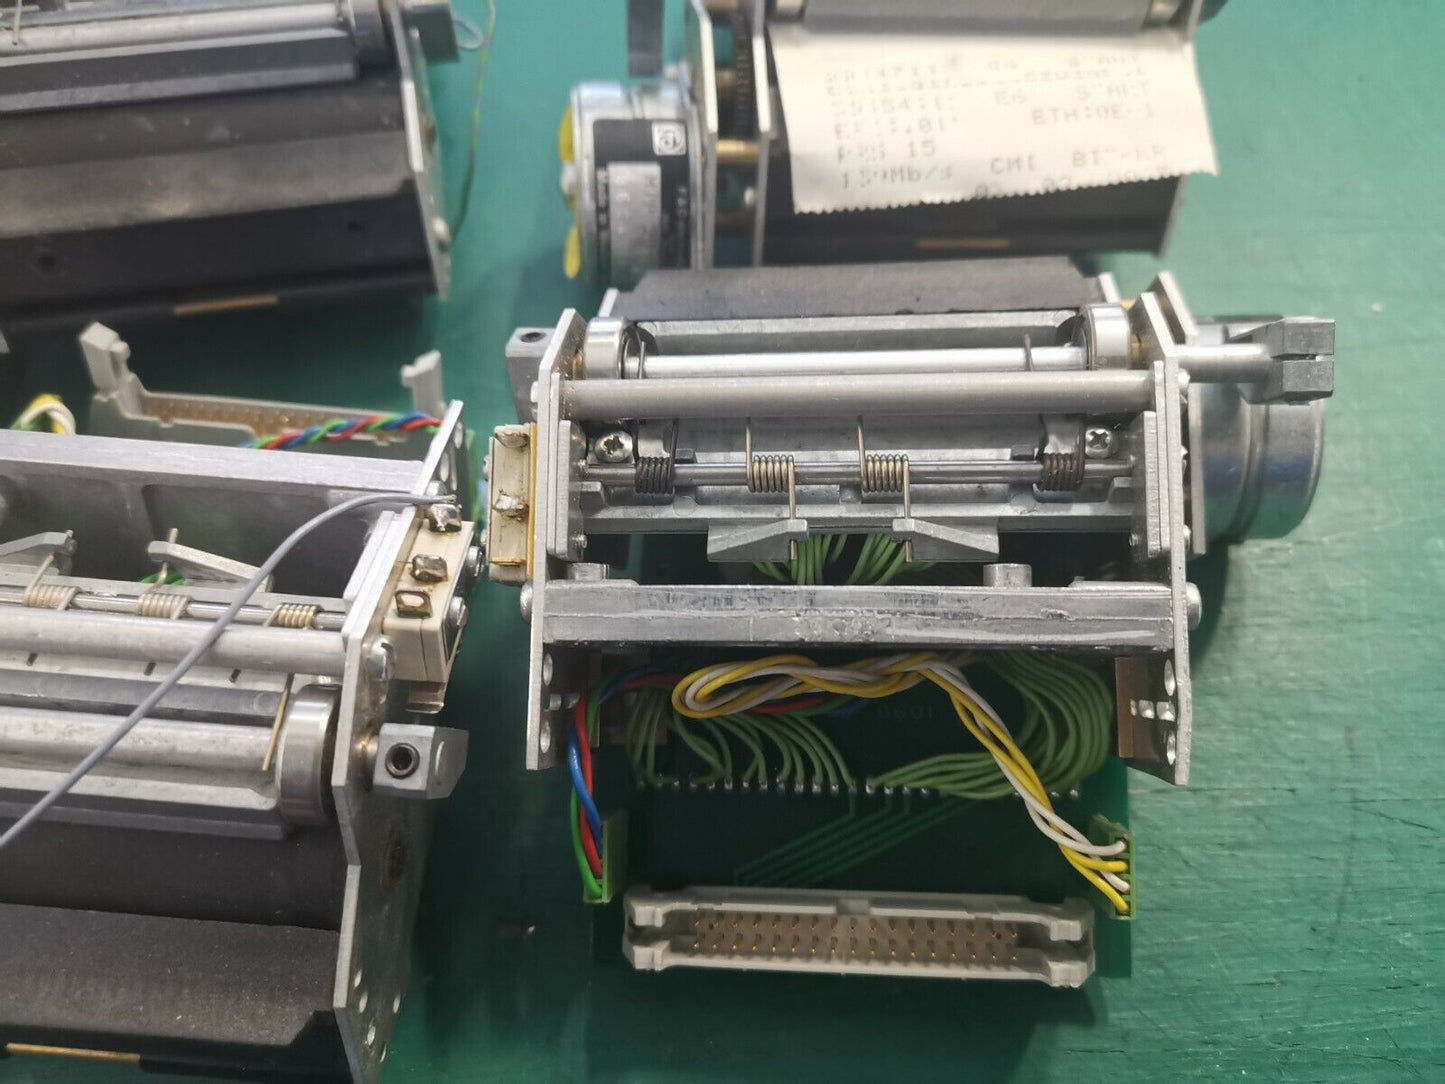 Electronic Test Gear Thermal Printer Joblot